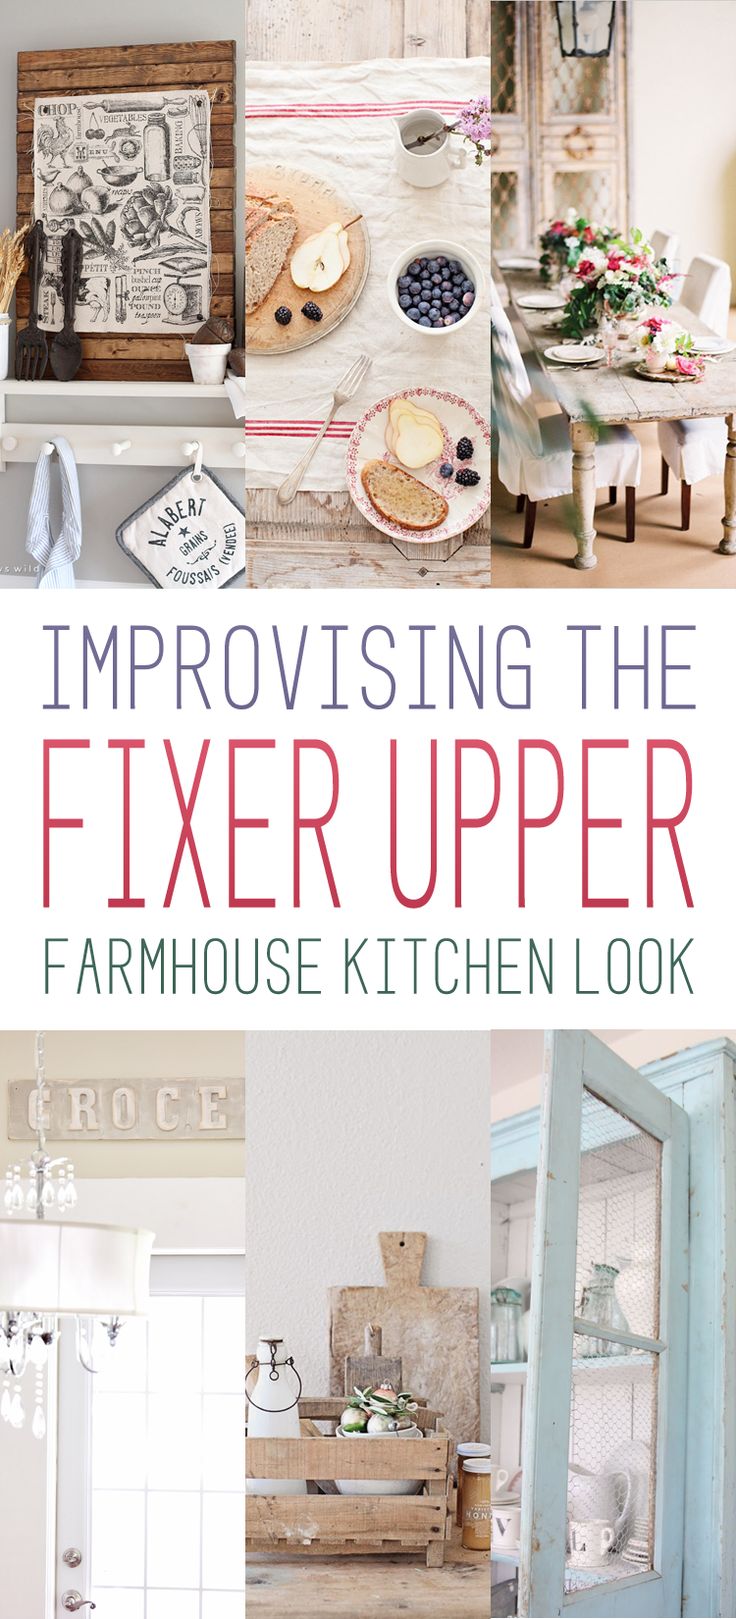 The Fixer Upper Farmhouse Kitchen Look